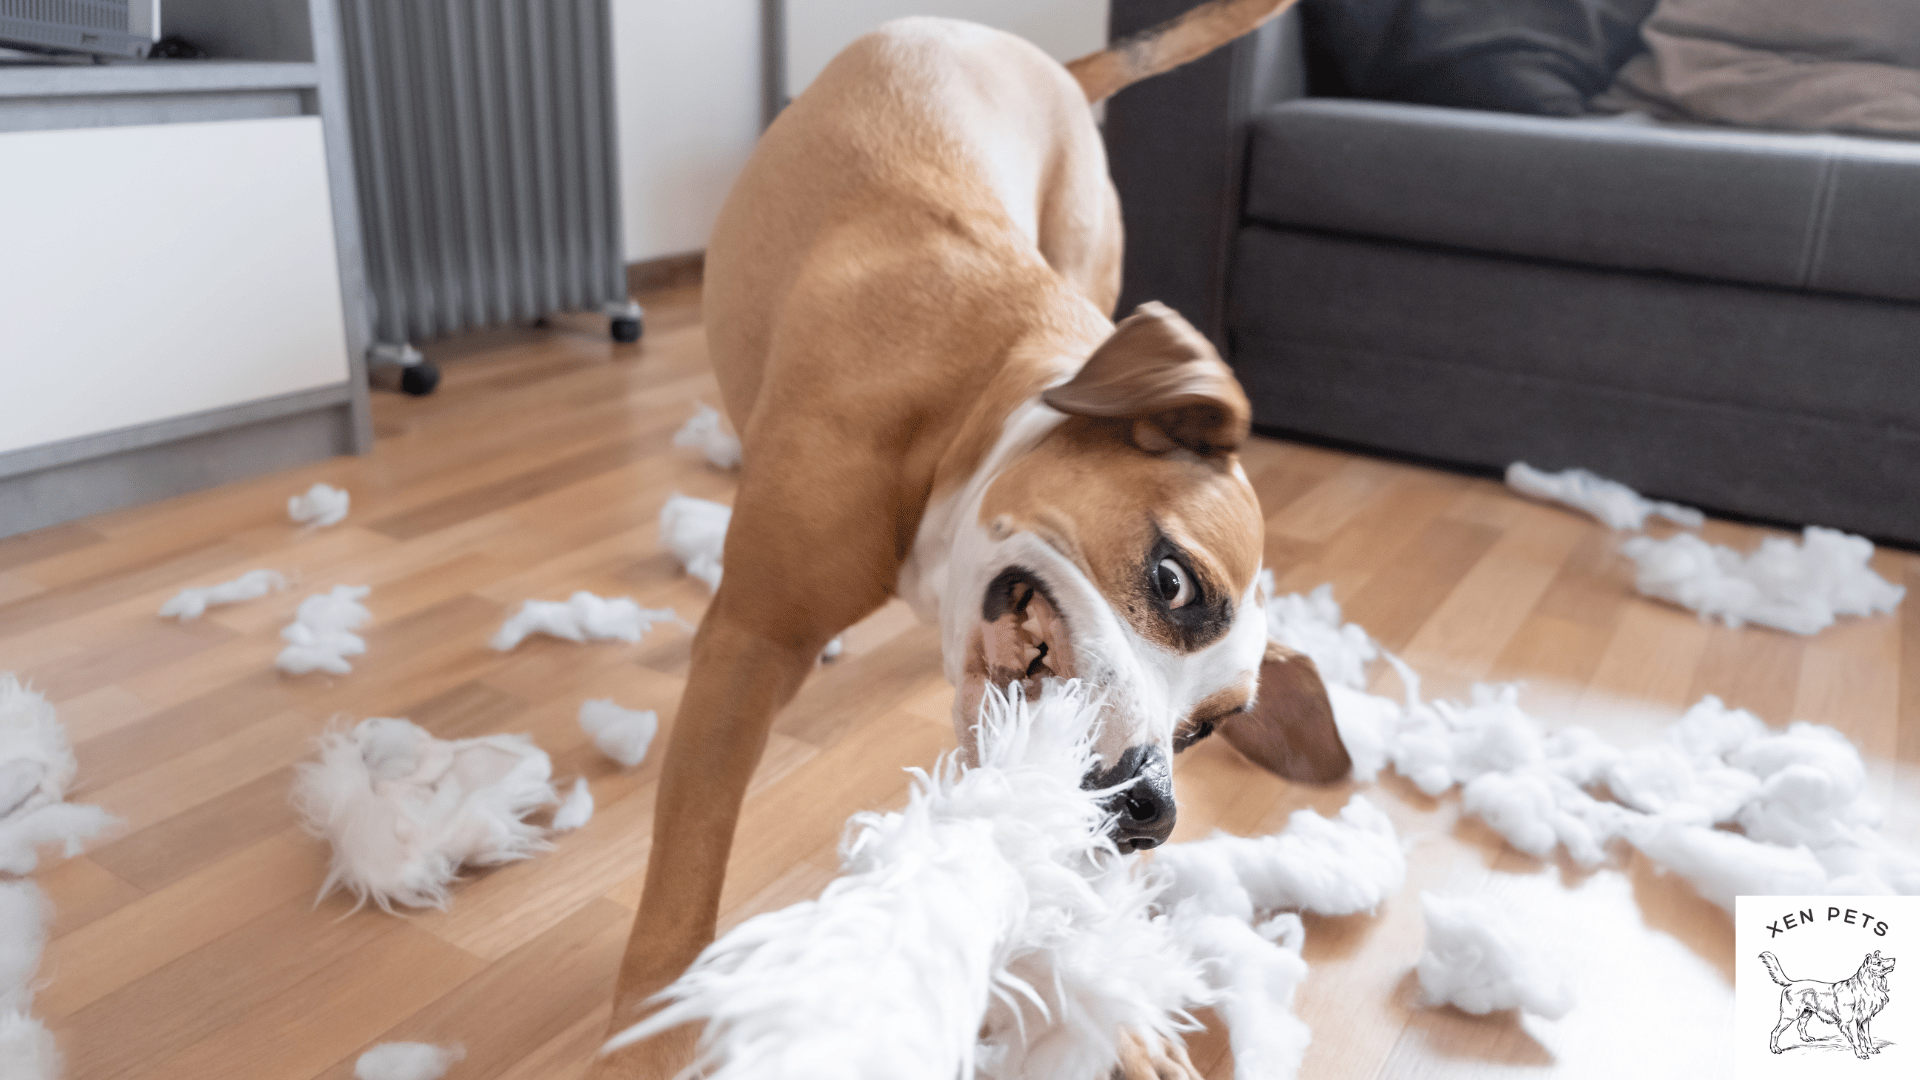 hyper dog destroying the house